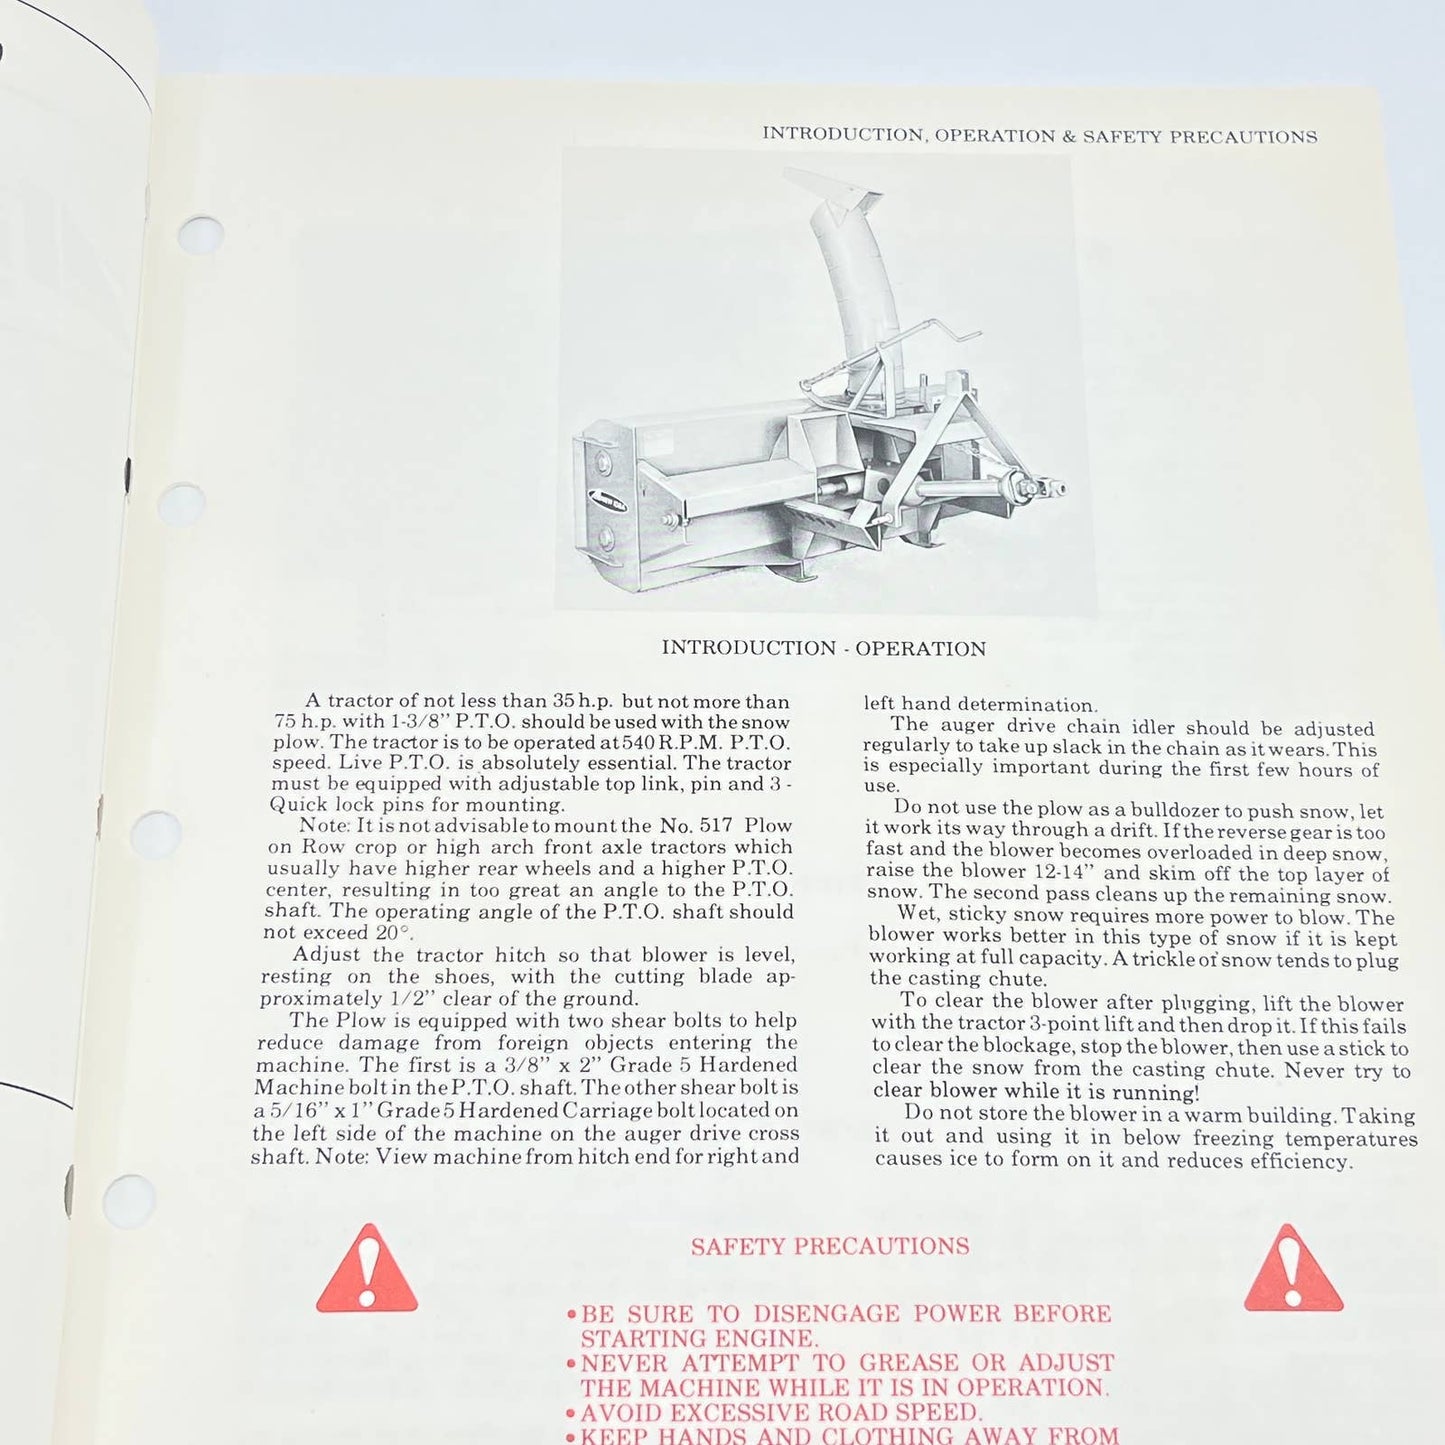 Original 1976 New Idea No. 517 Three Point Hitch 86" Rotary Snow Plow Manual TB9